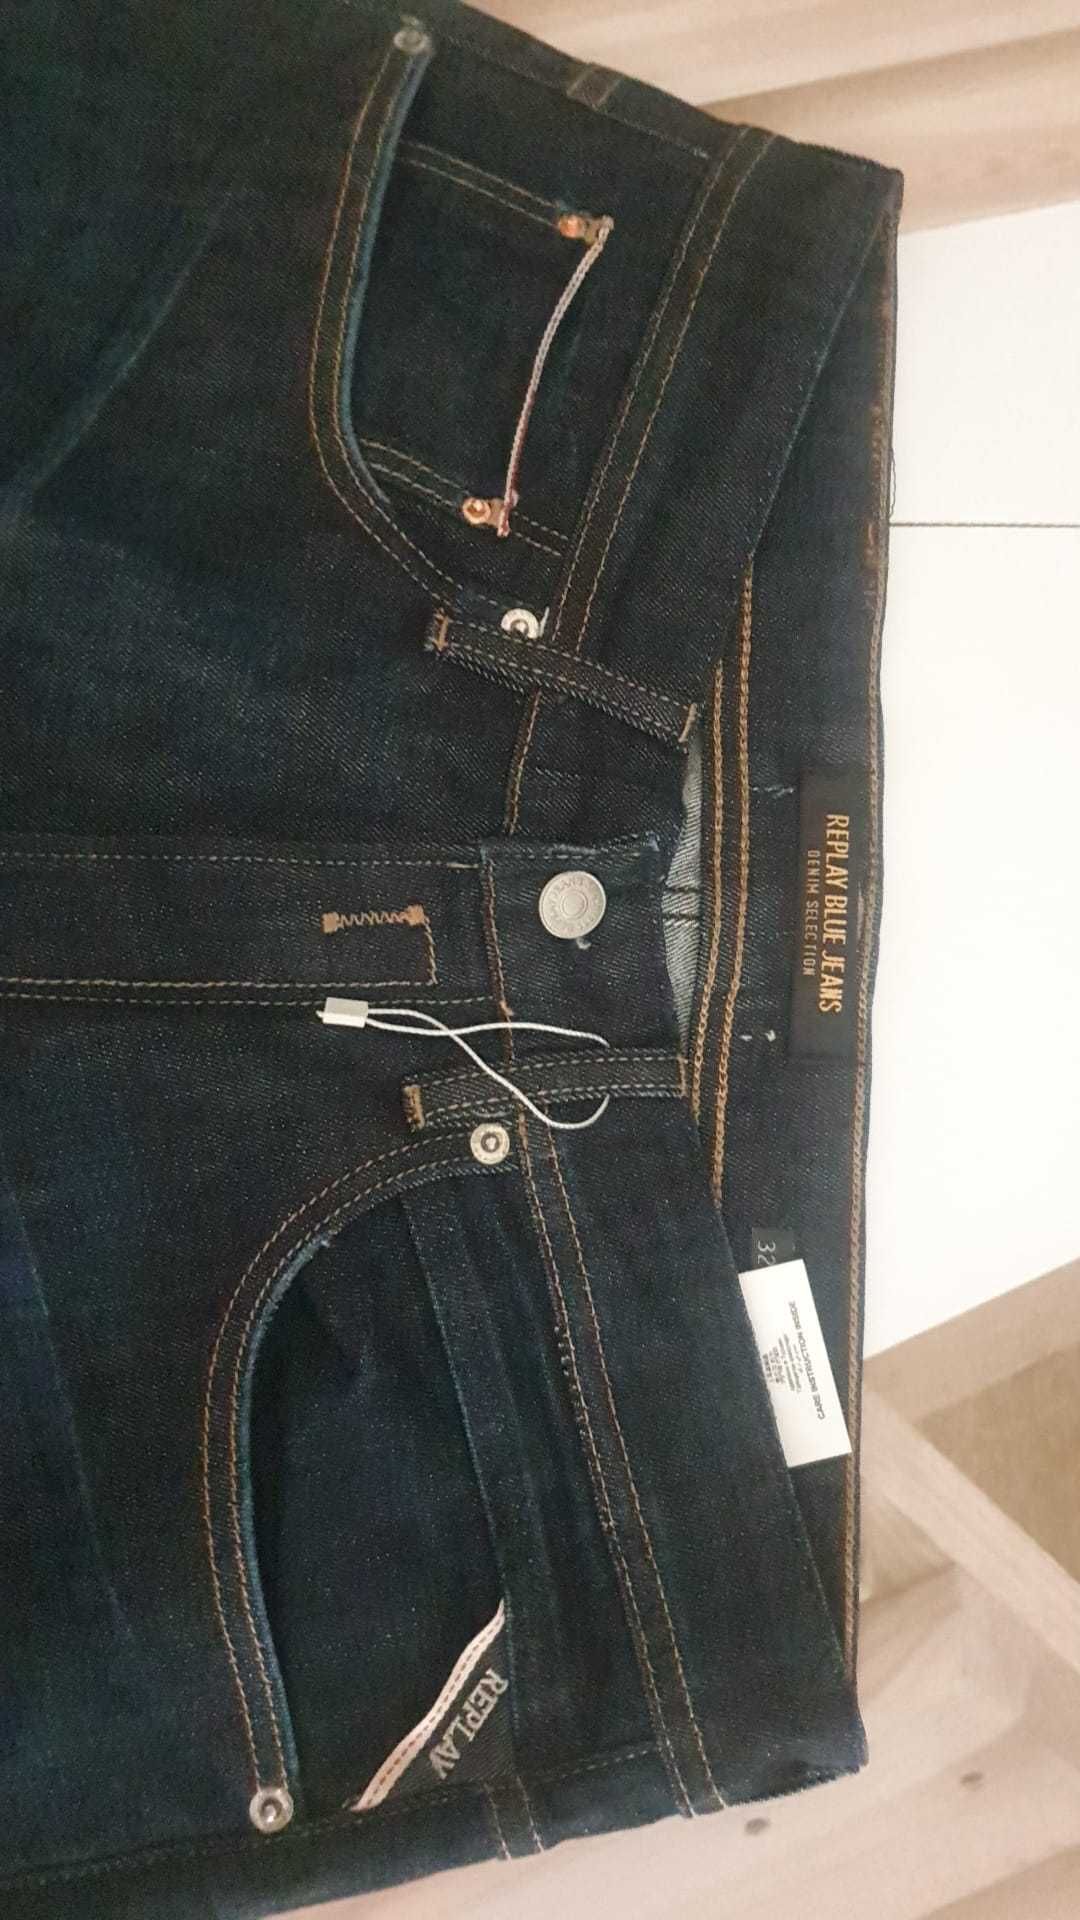 Vand blugi barbat Replay Jeans masura W30 / L32 originali noi.